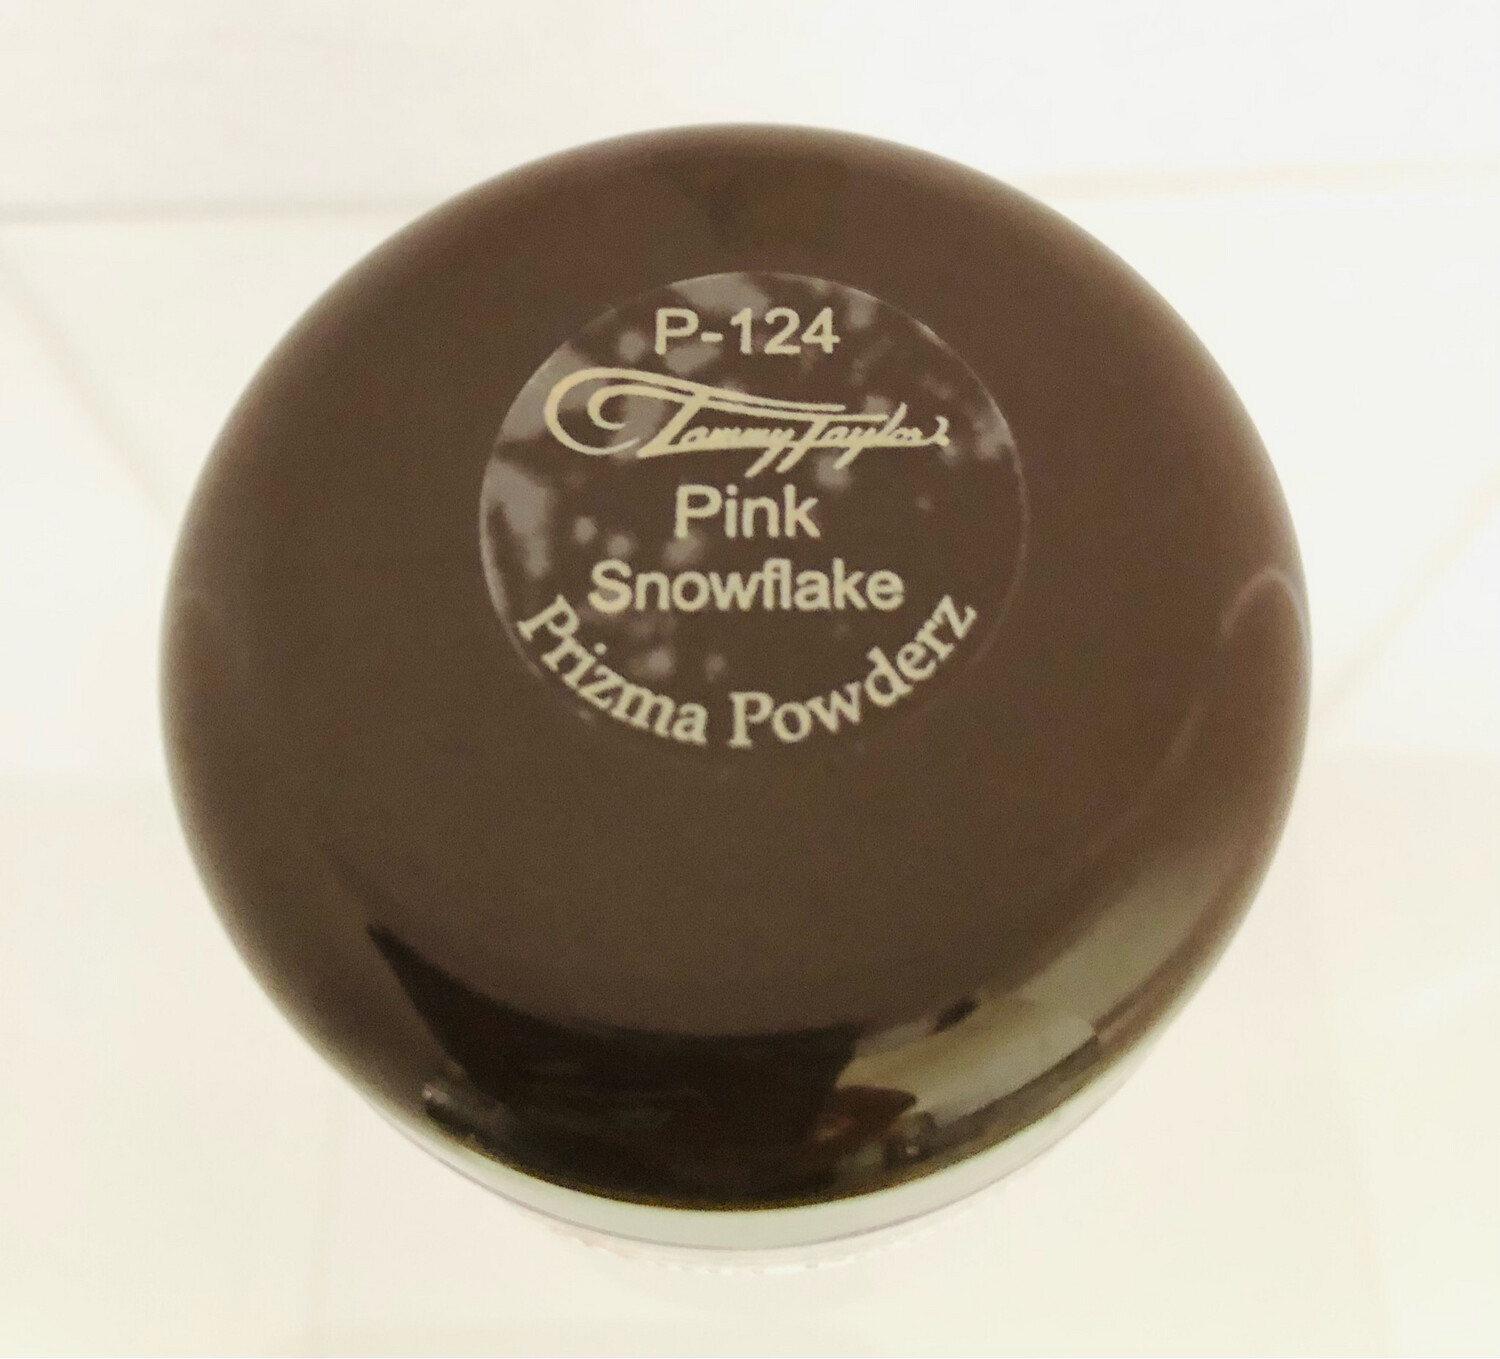 TT Prizma Pink Snowlflake 1.5oz P-124